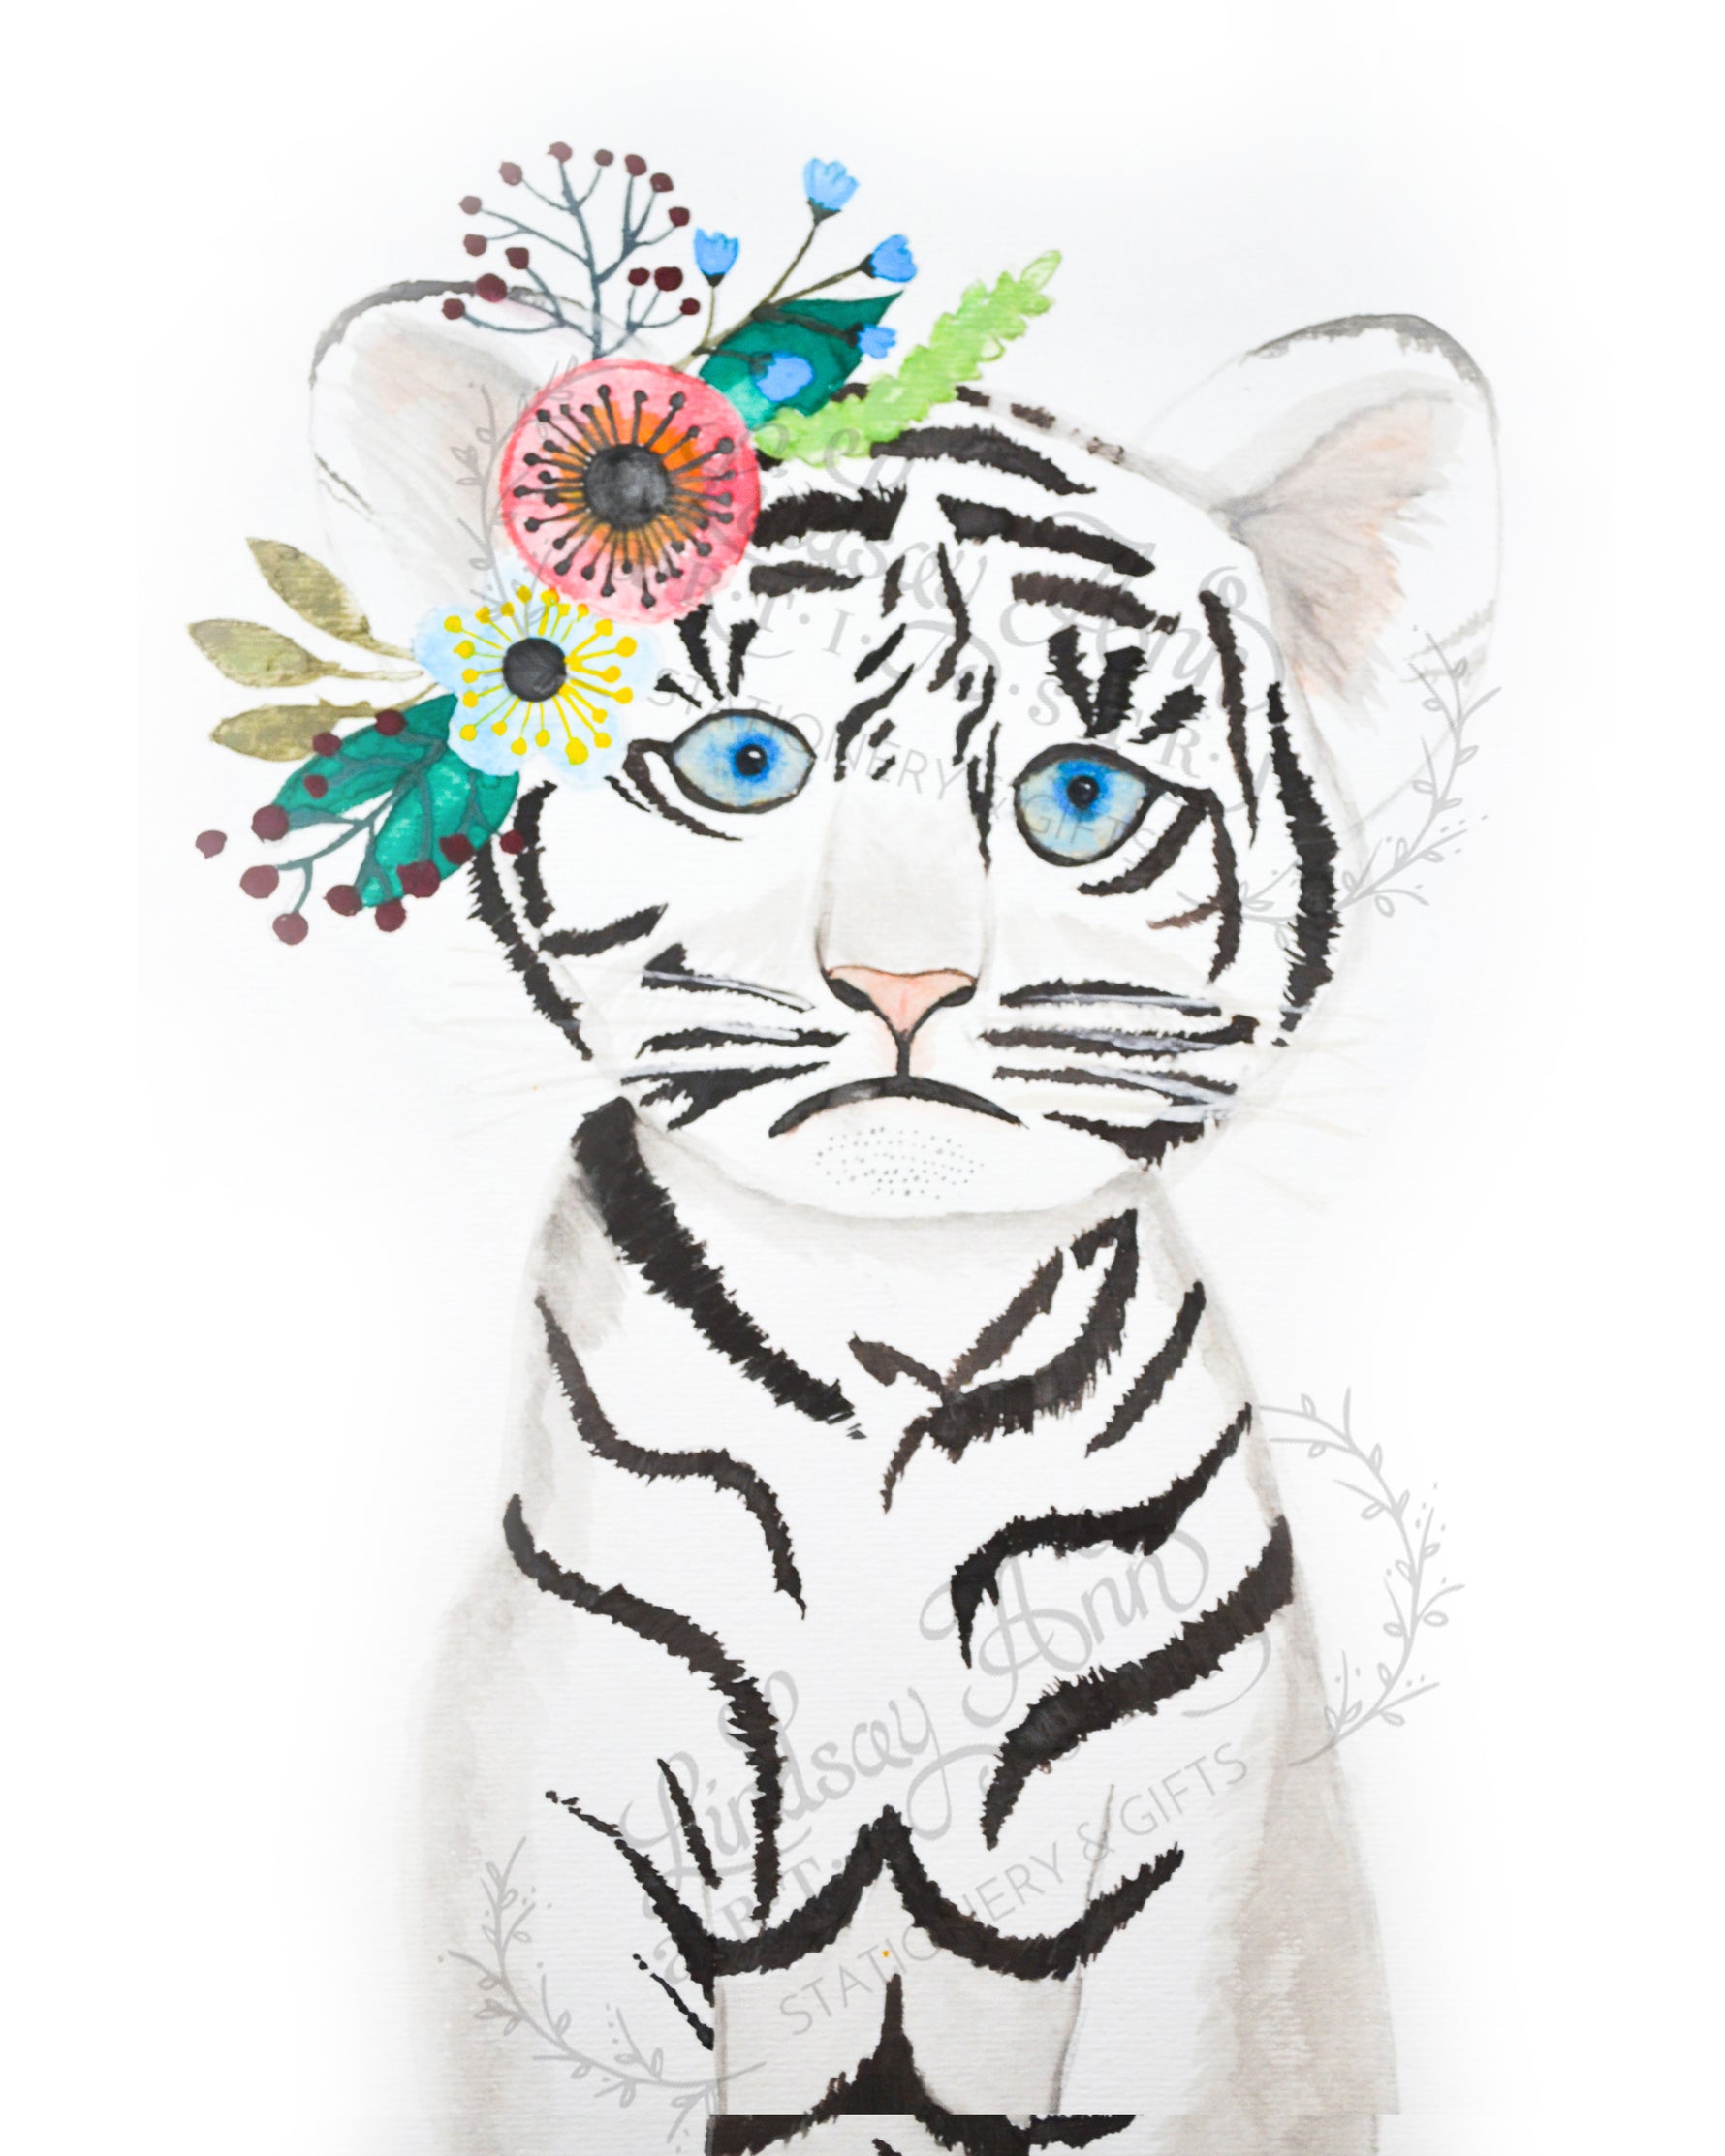 Boho Baby Tiger Cub Watercolor Print 8 x 10 Downloadable - Lindsay Ann Artistry